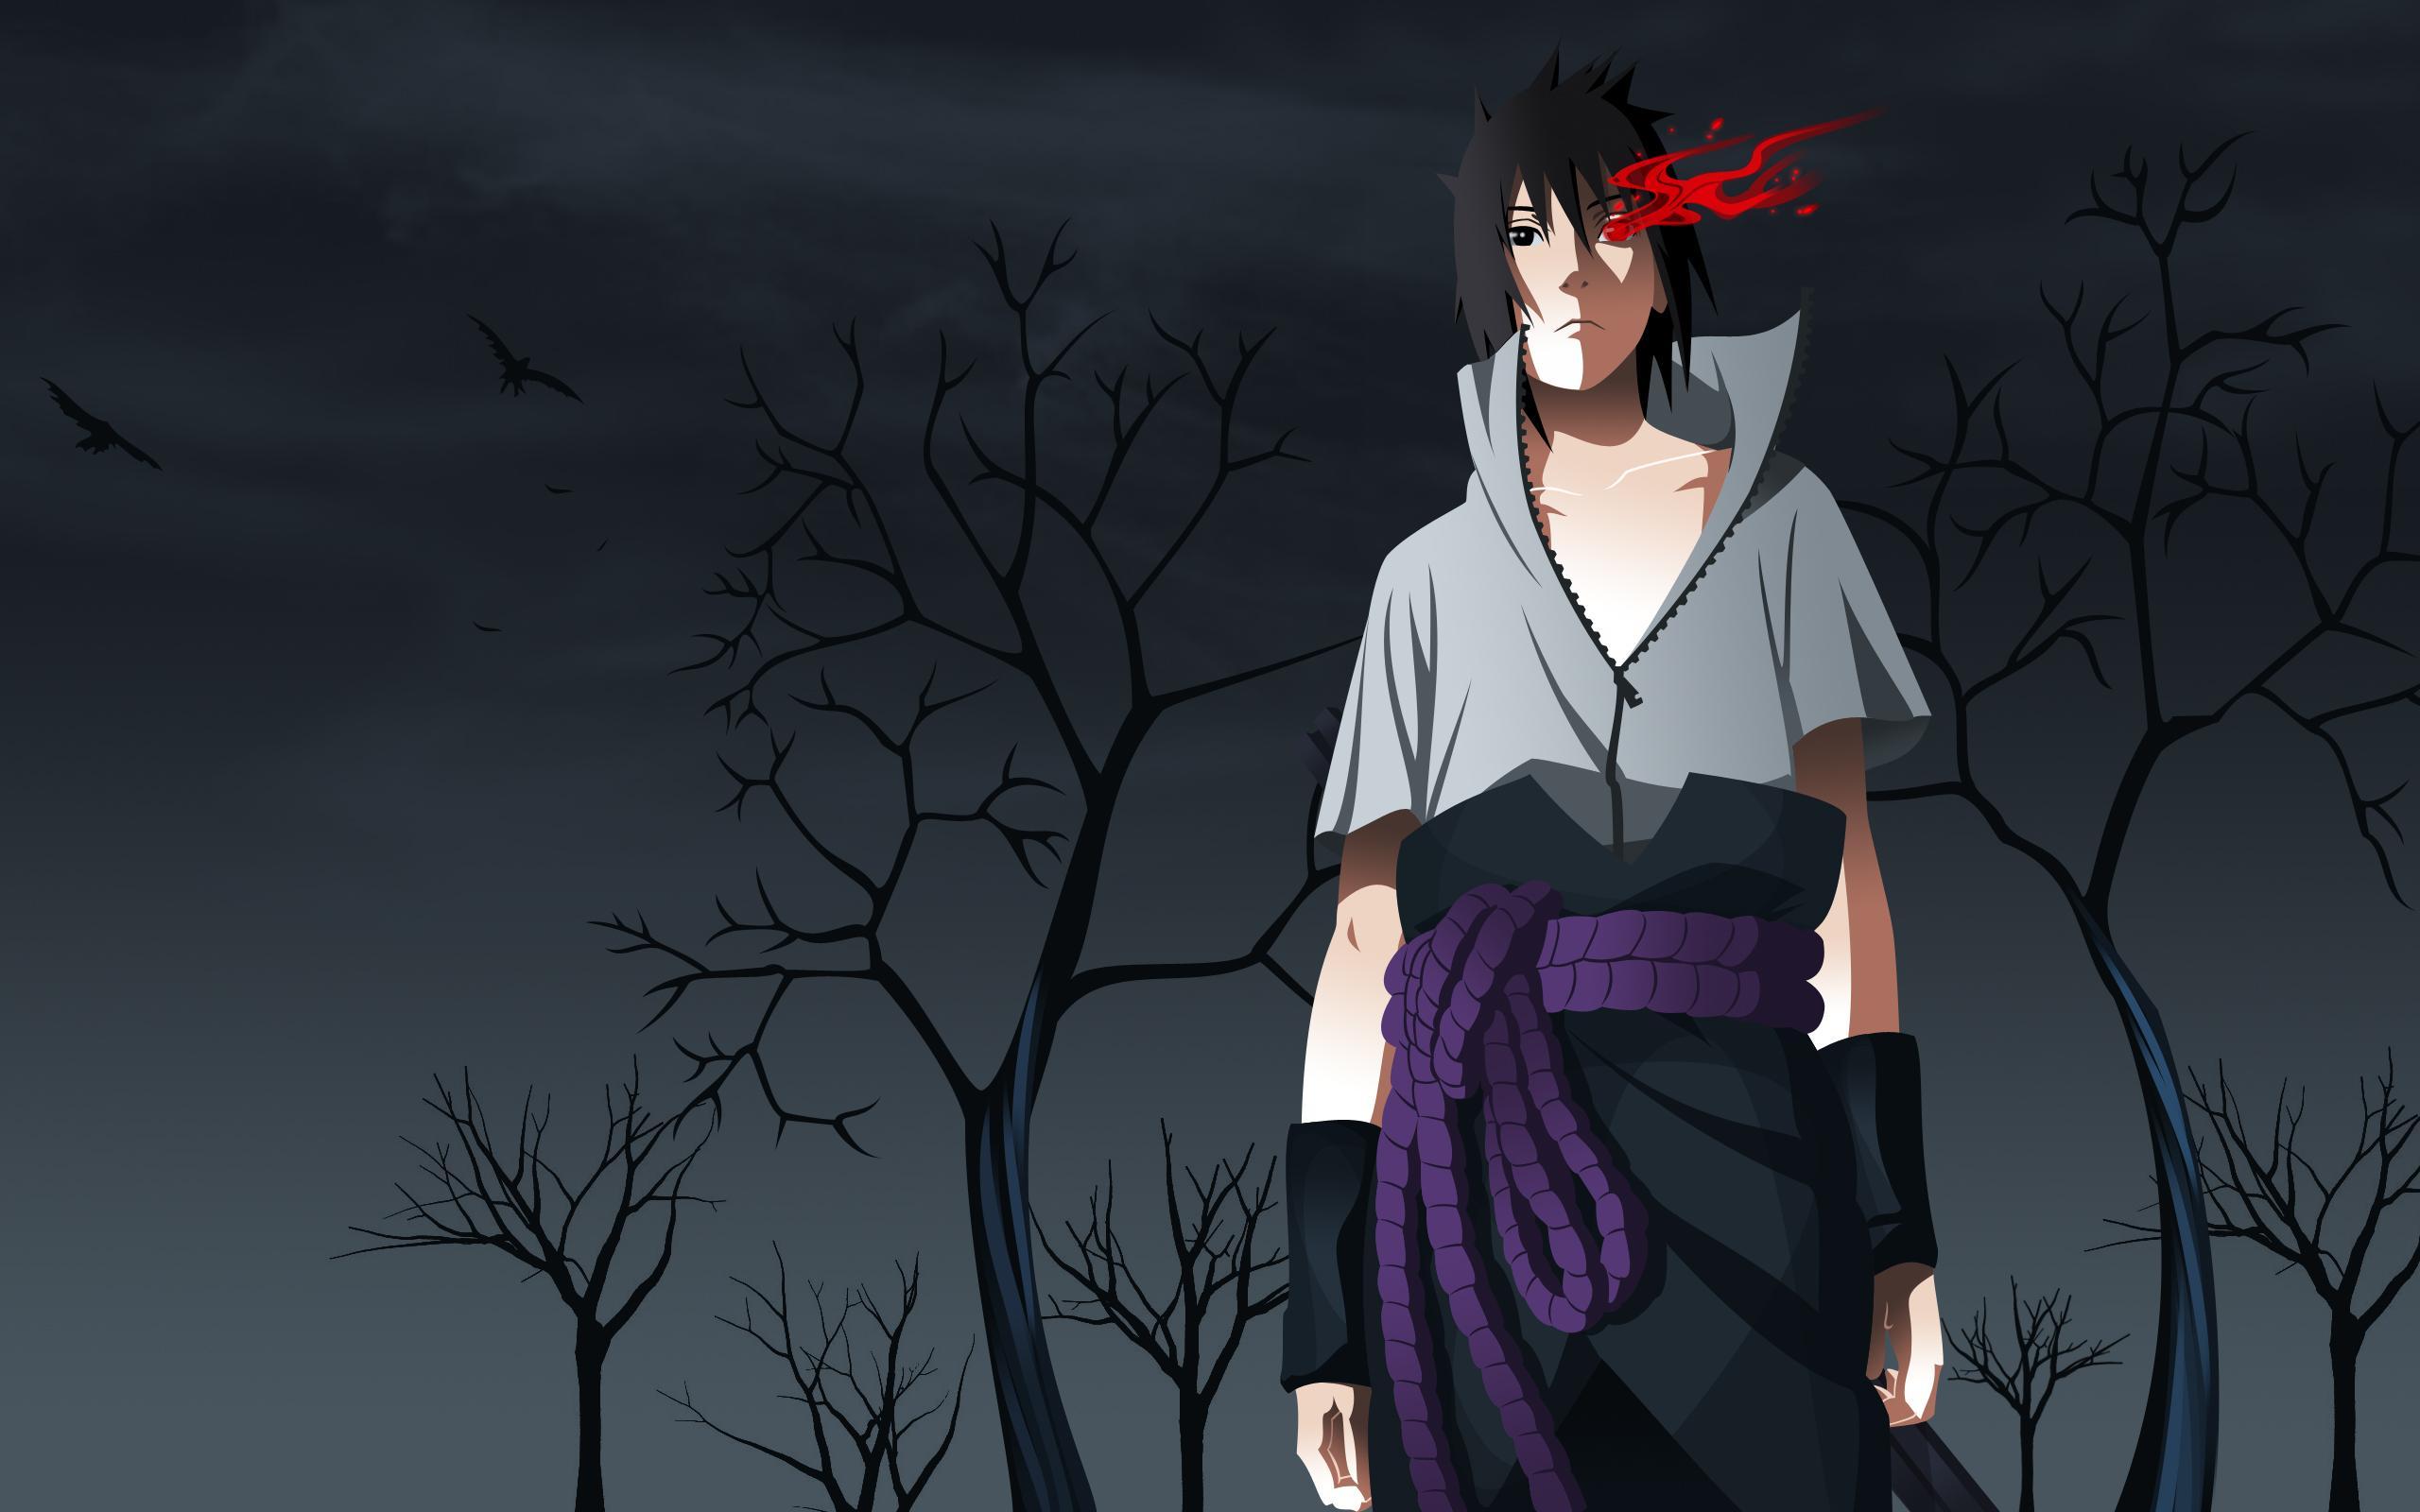 BFU:43 Uchiha Wallpaper, High Resolution Awesome Sasuke